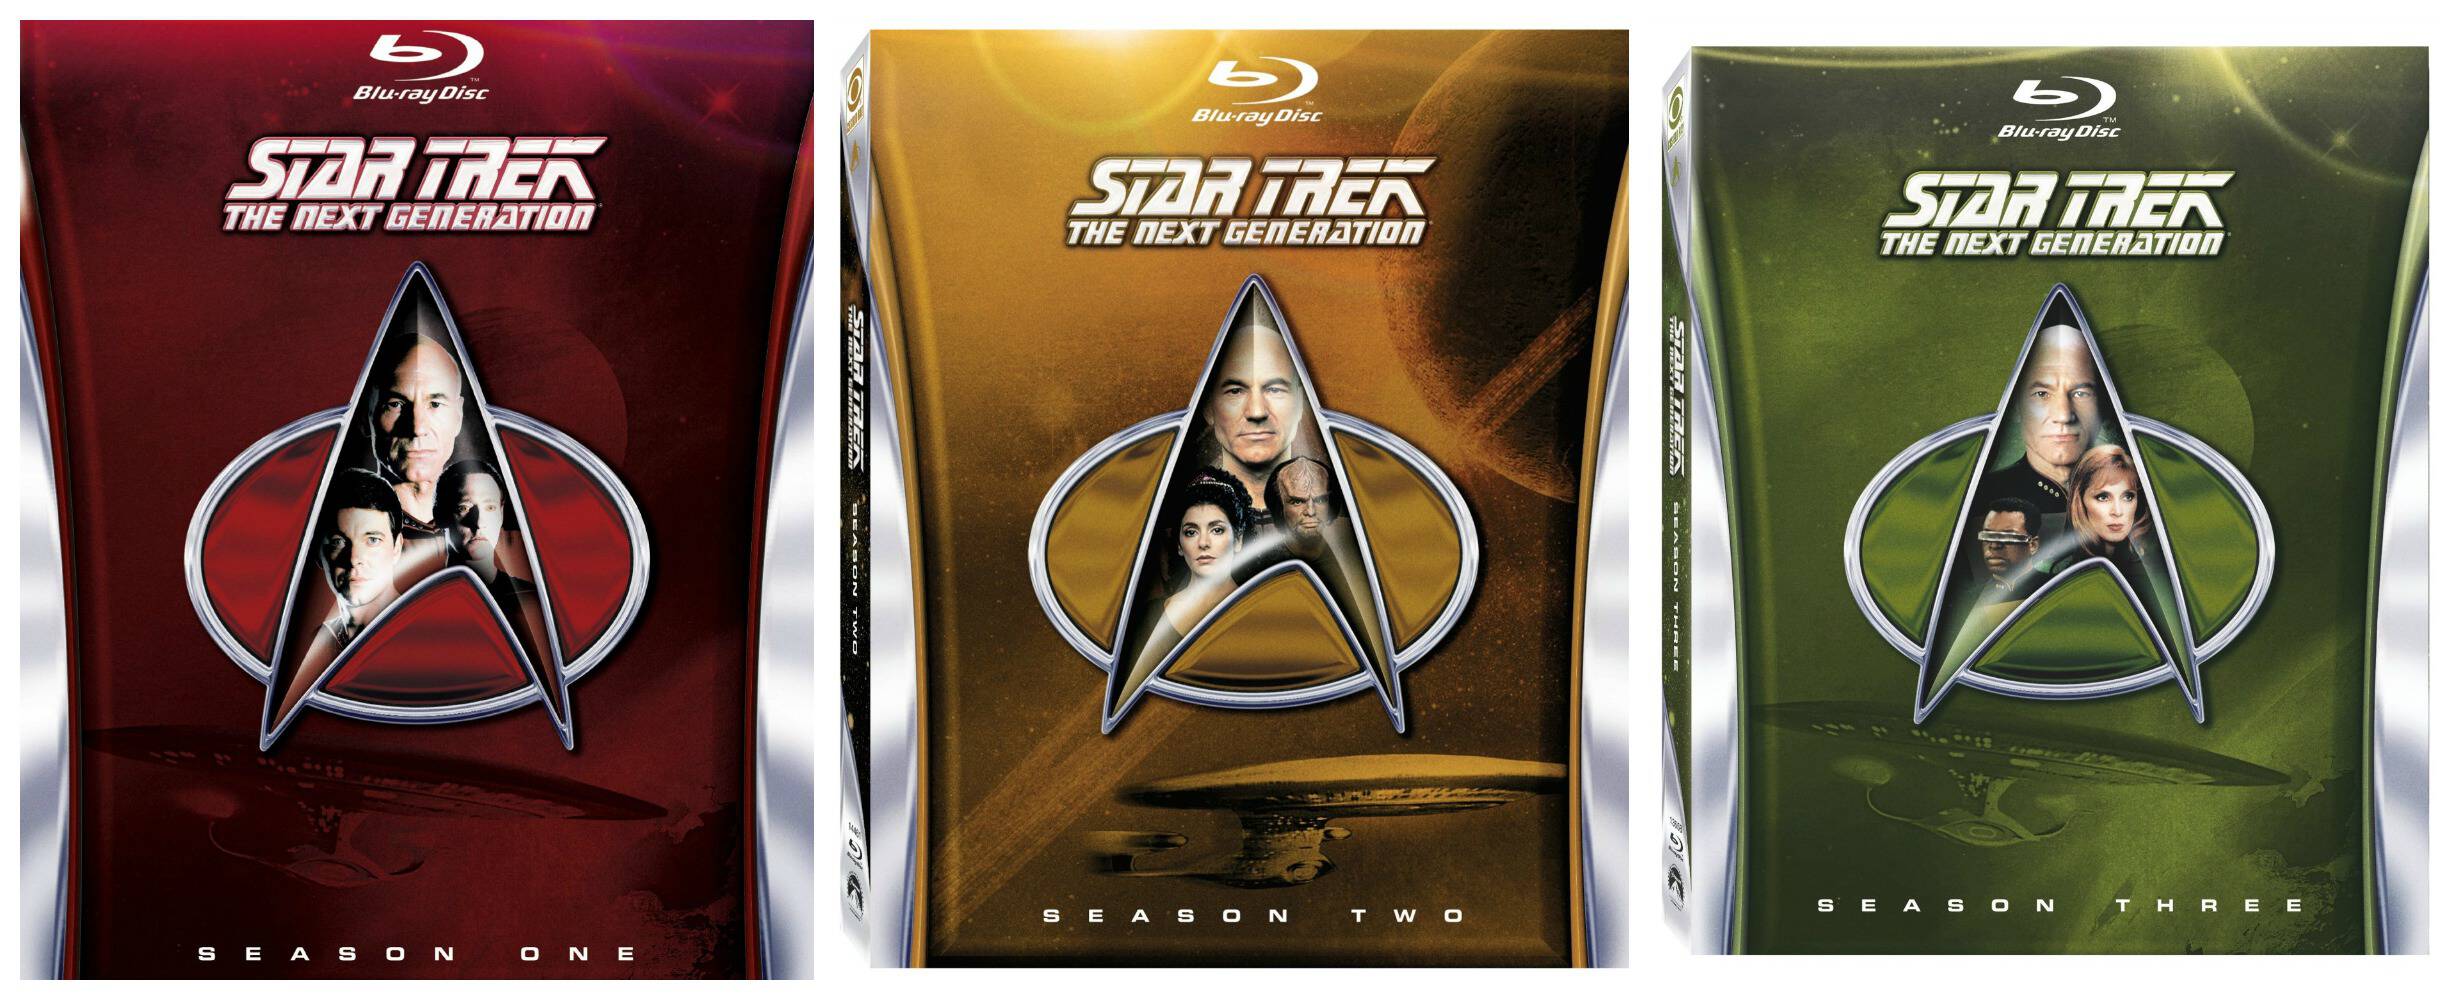 Star Trek Season 1-3